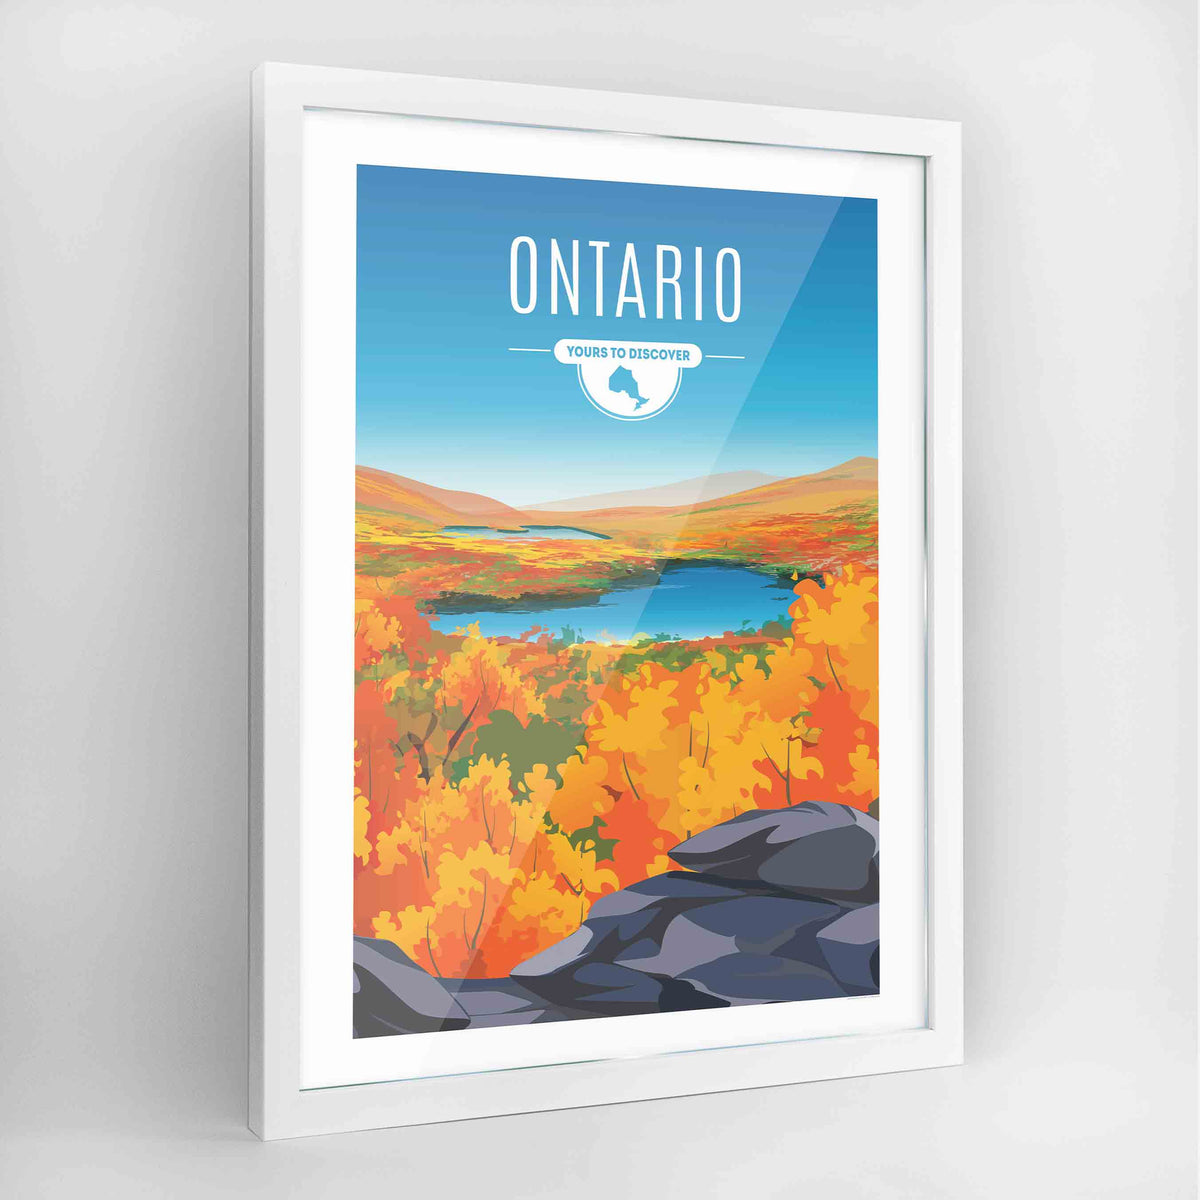 Ontario Province Frame Print